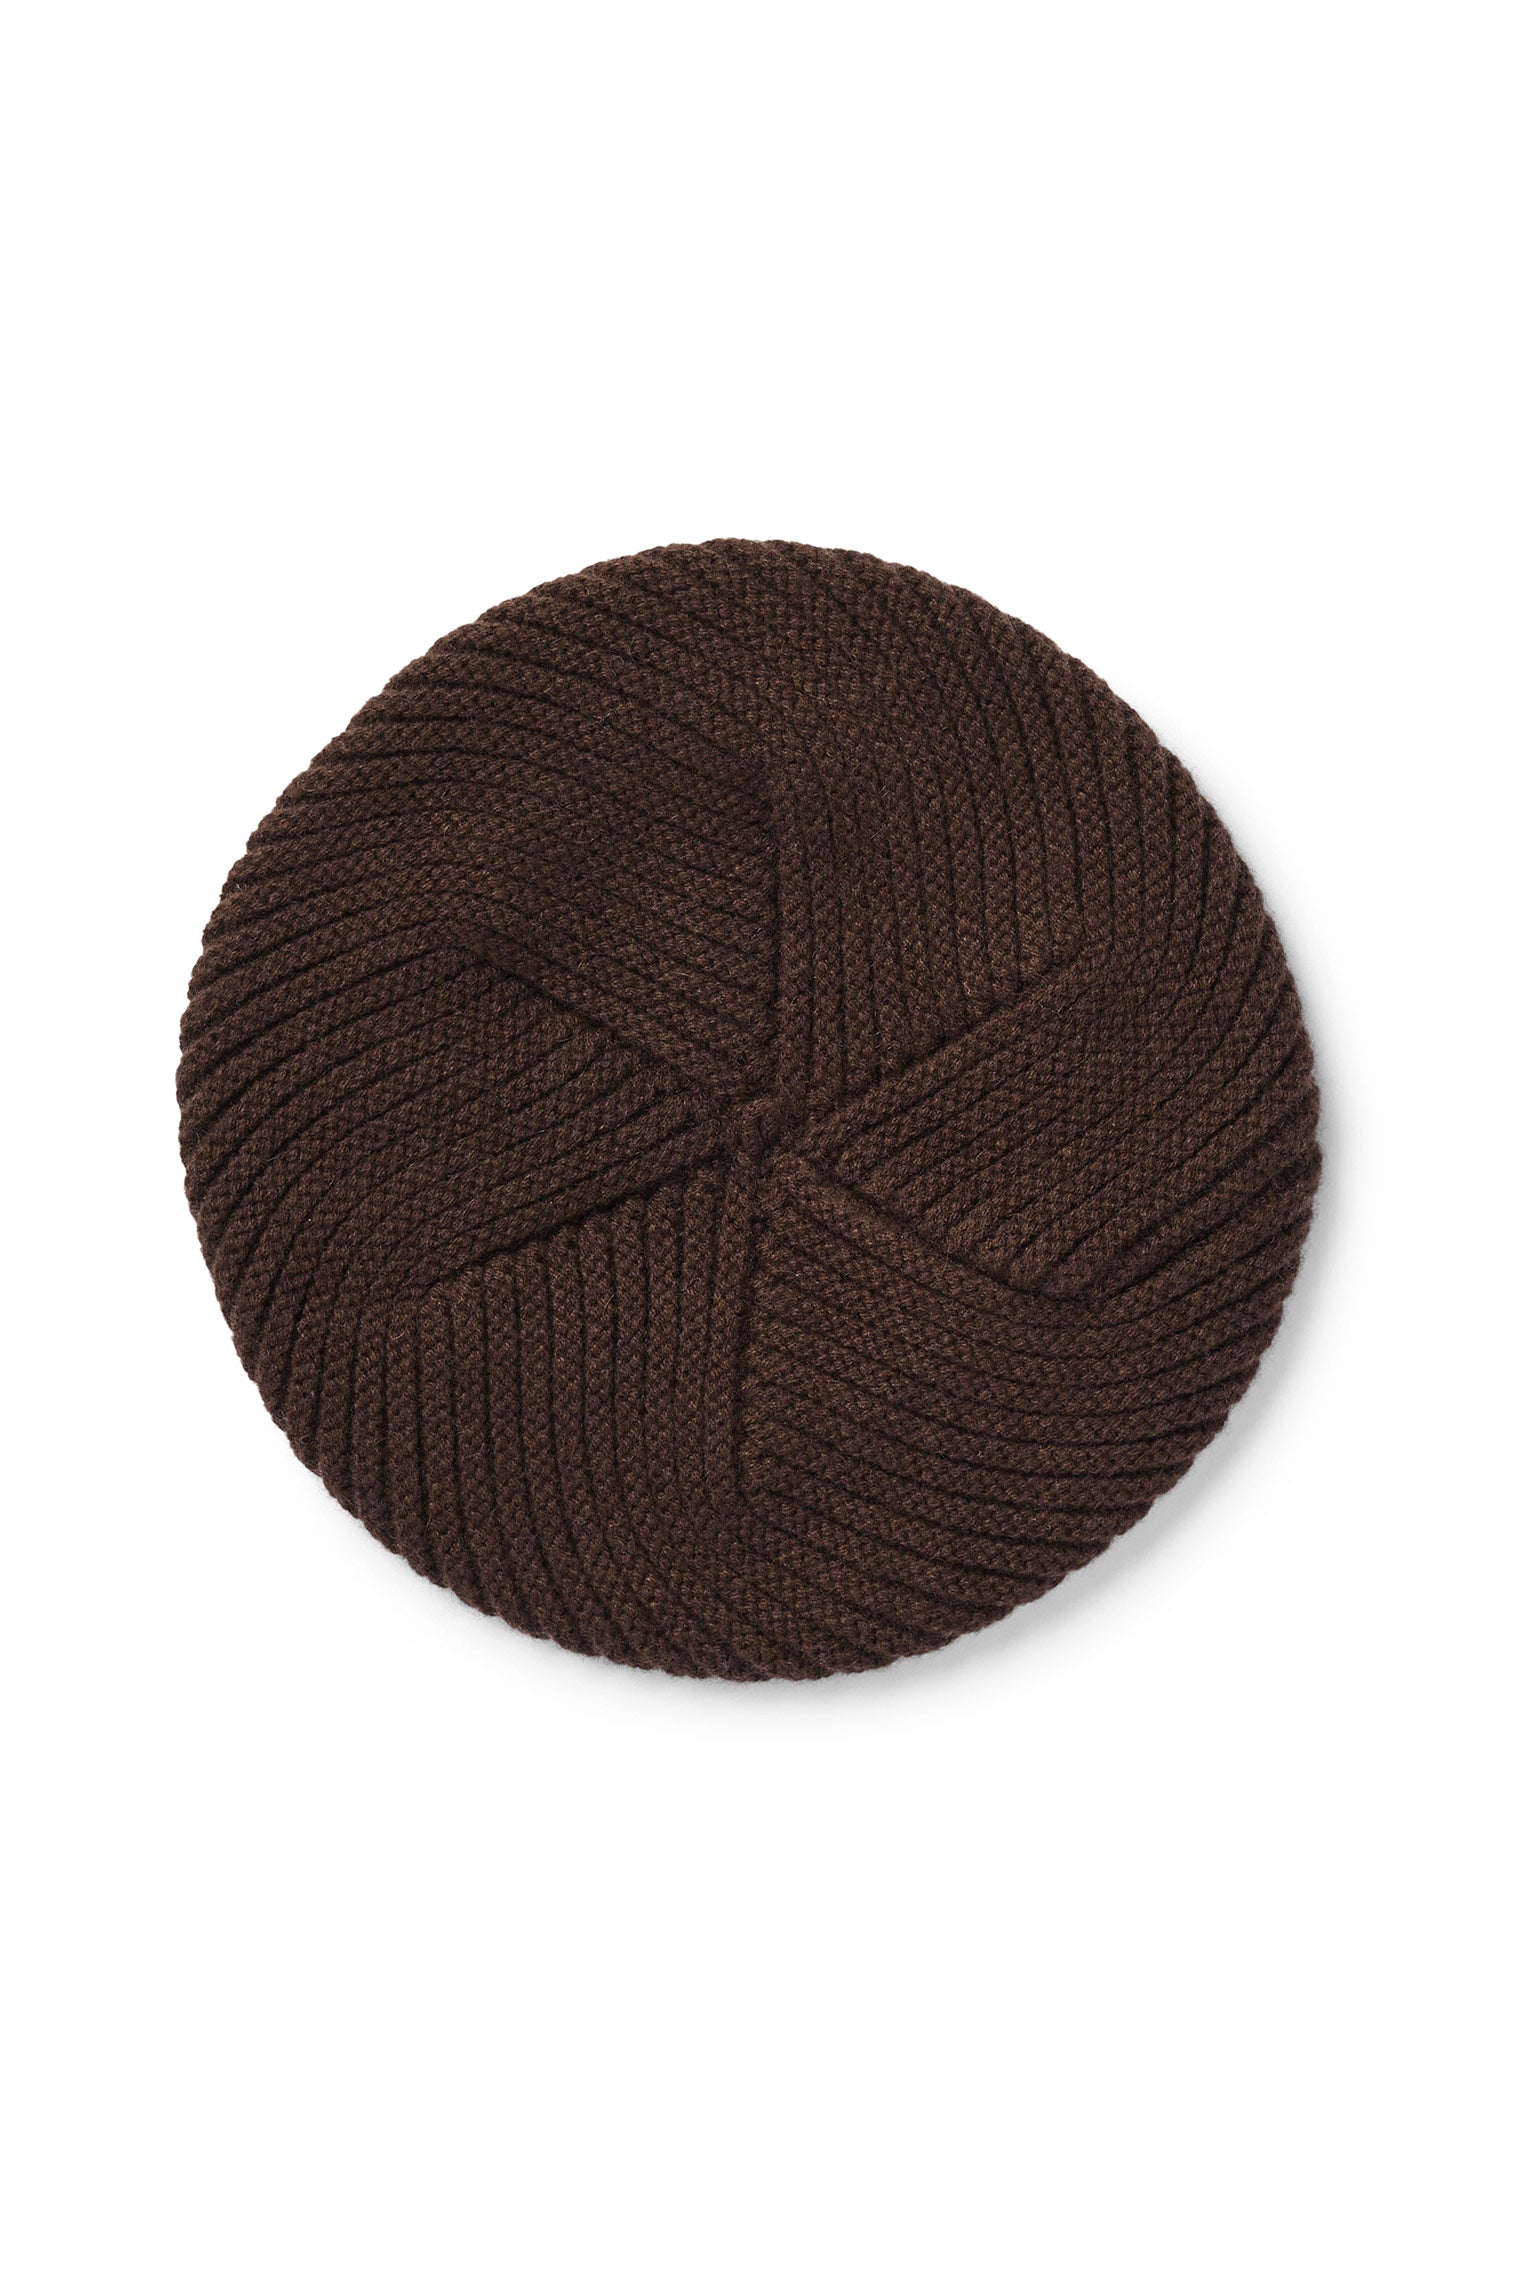 Brown Knitted Cashmere Beret - New Season Women's Hats - Lock & Co. Hatters London UK